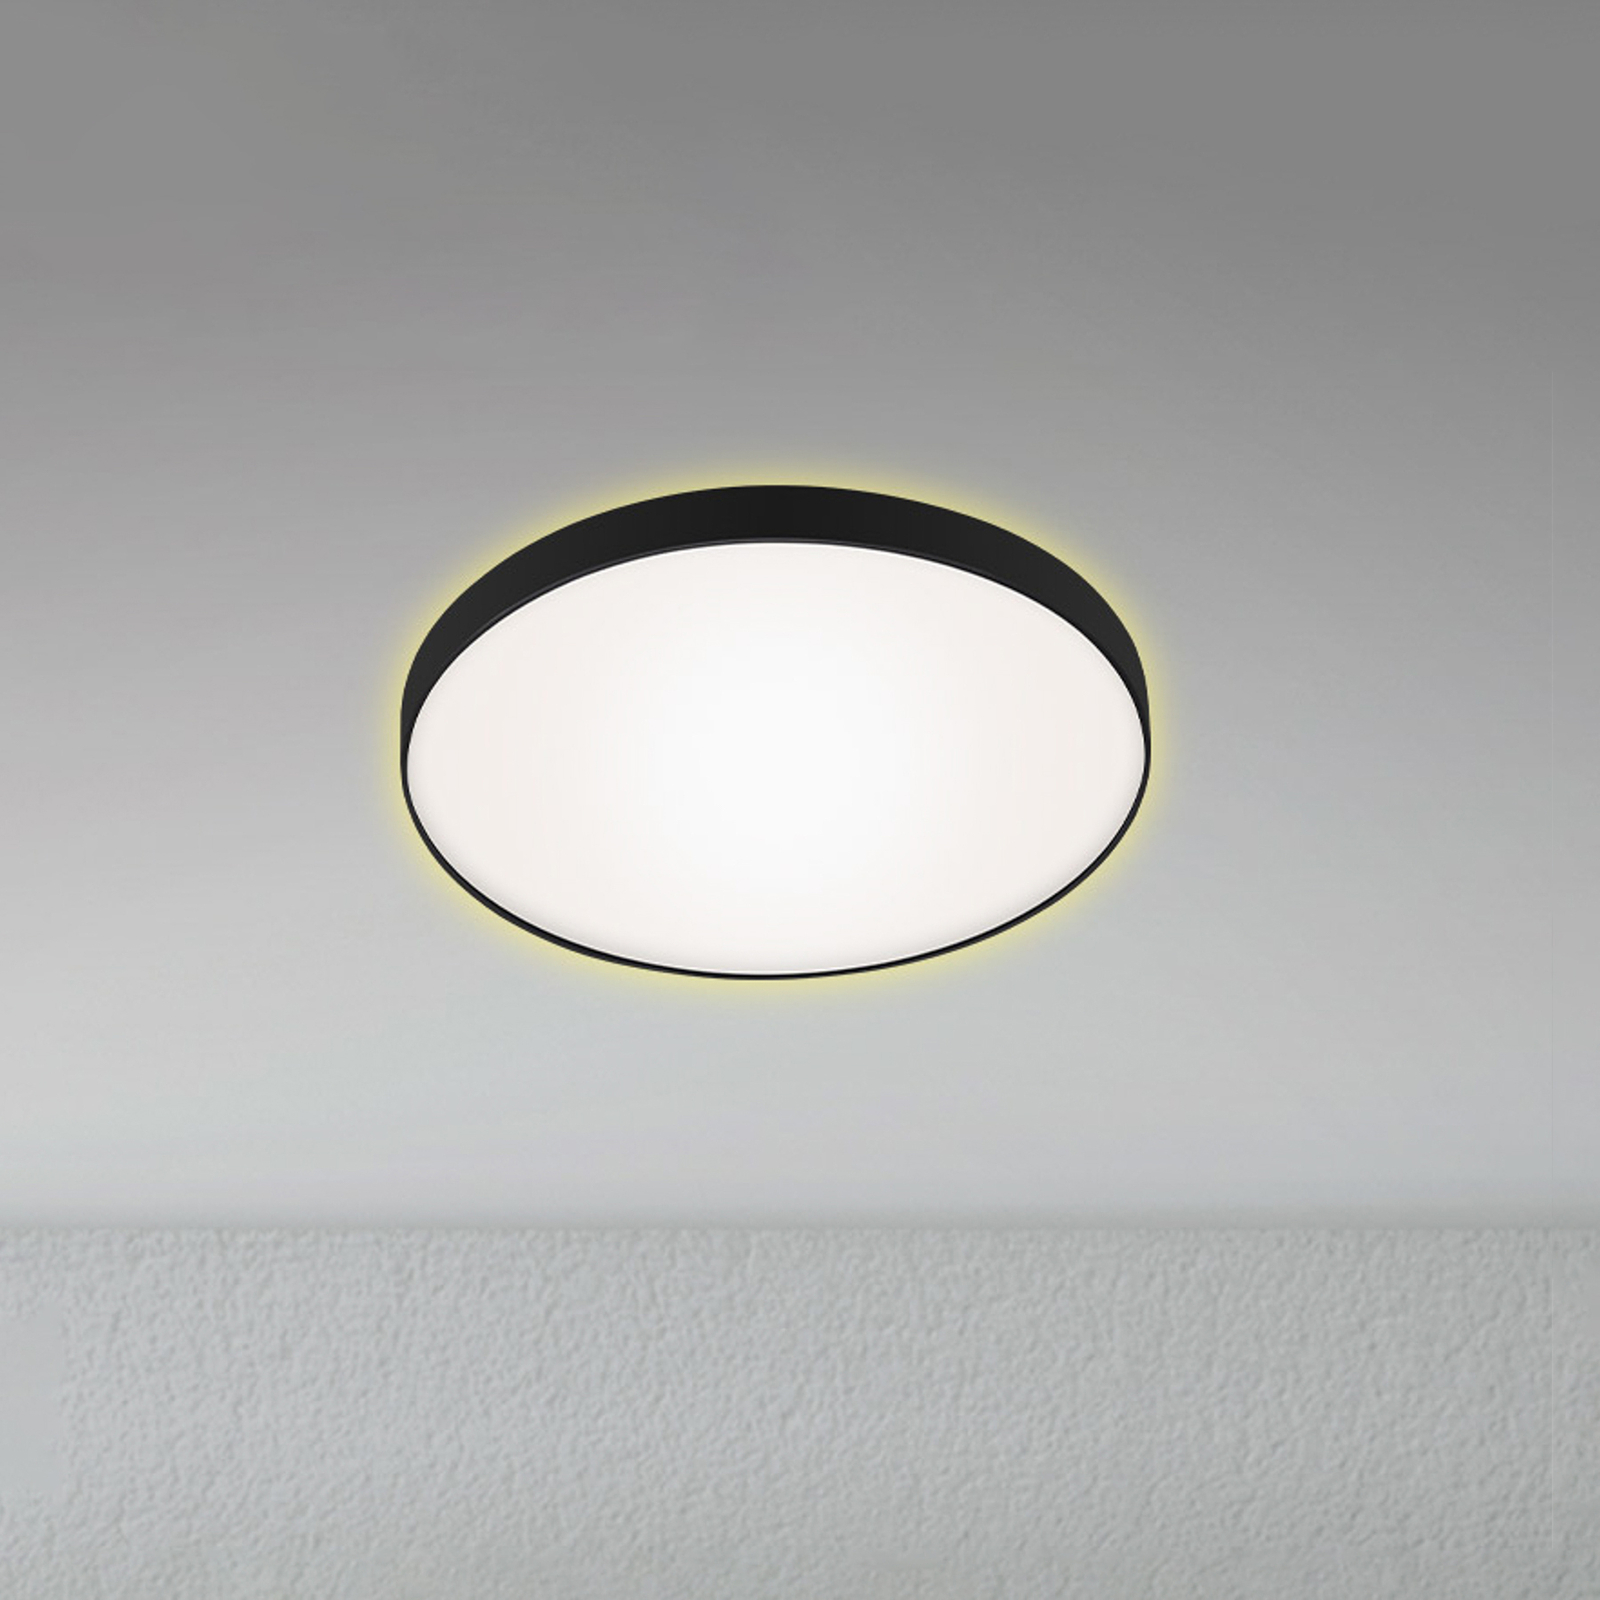 Flet LED-taklampe med backlight, Ø 28,5 cm